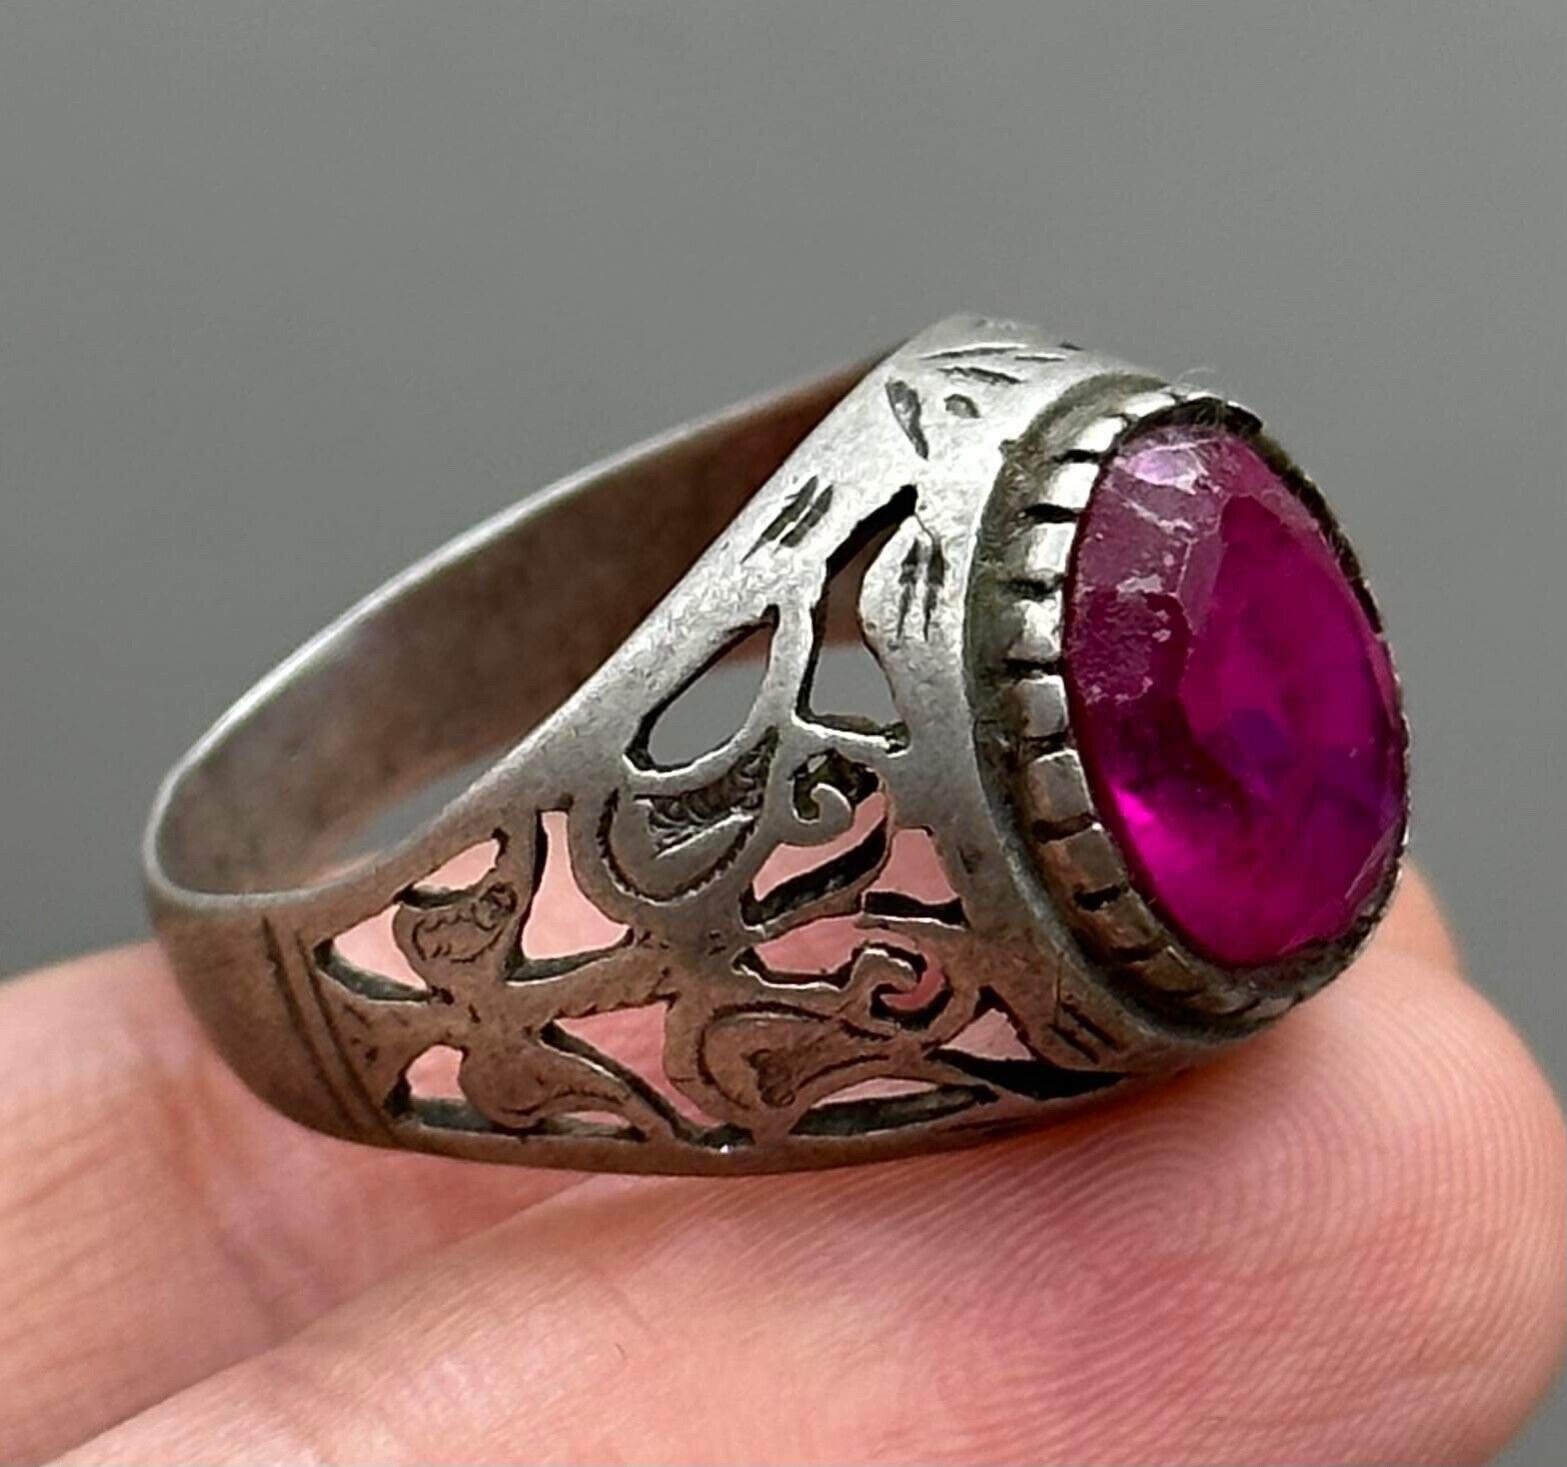 Vintage Original ruby stone old solid silver Stunning Wonderful Ring